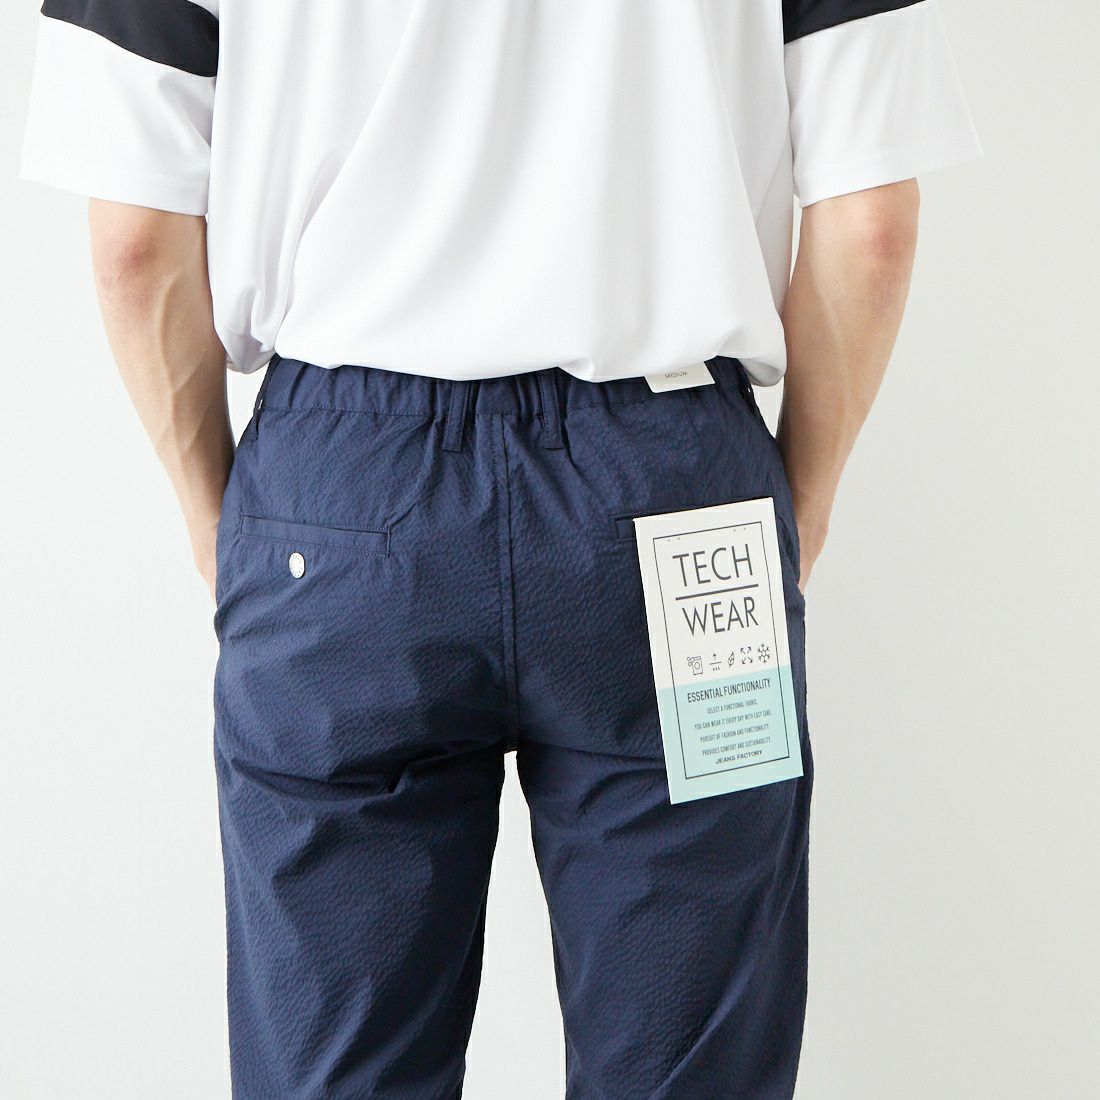 Jeans Factory Clothes [ジーンズファクトリークローズ] COOLMAX サッカーリラックスアンクルトラウザー [JFC-232-032] 02 NVY